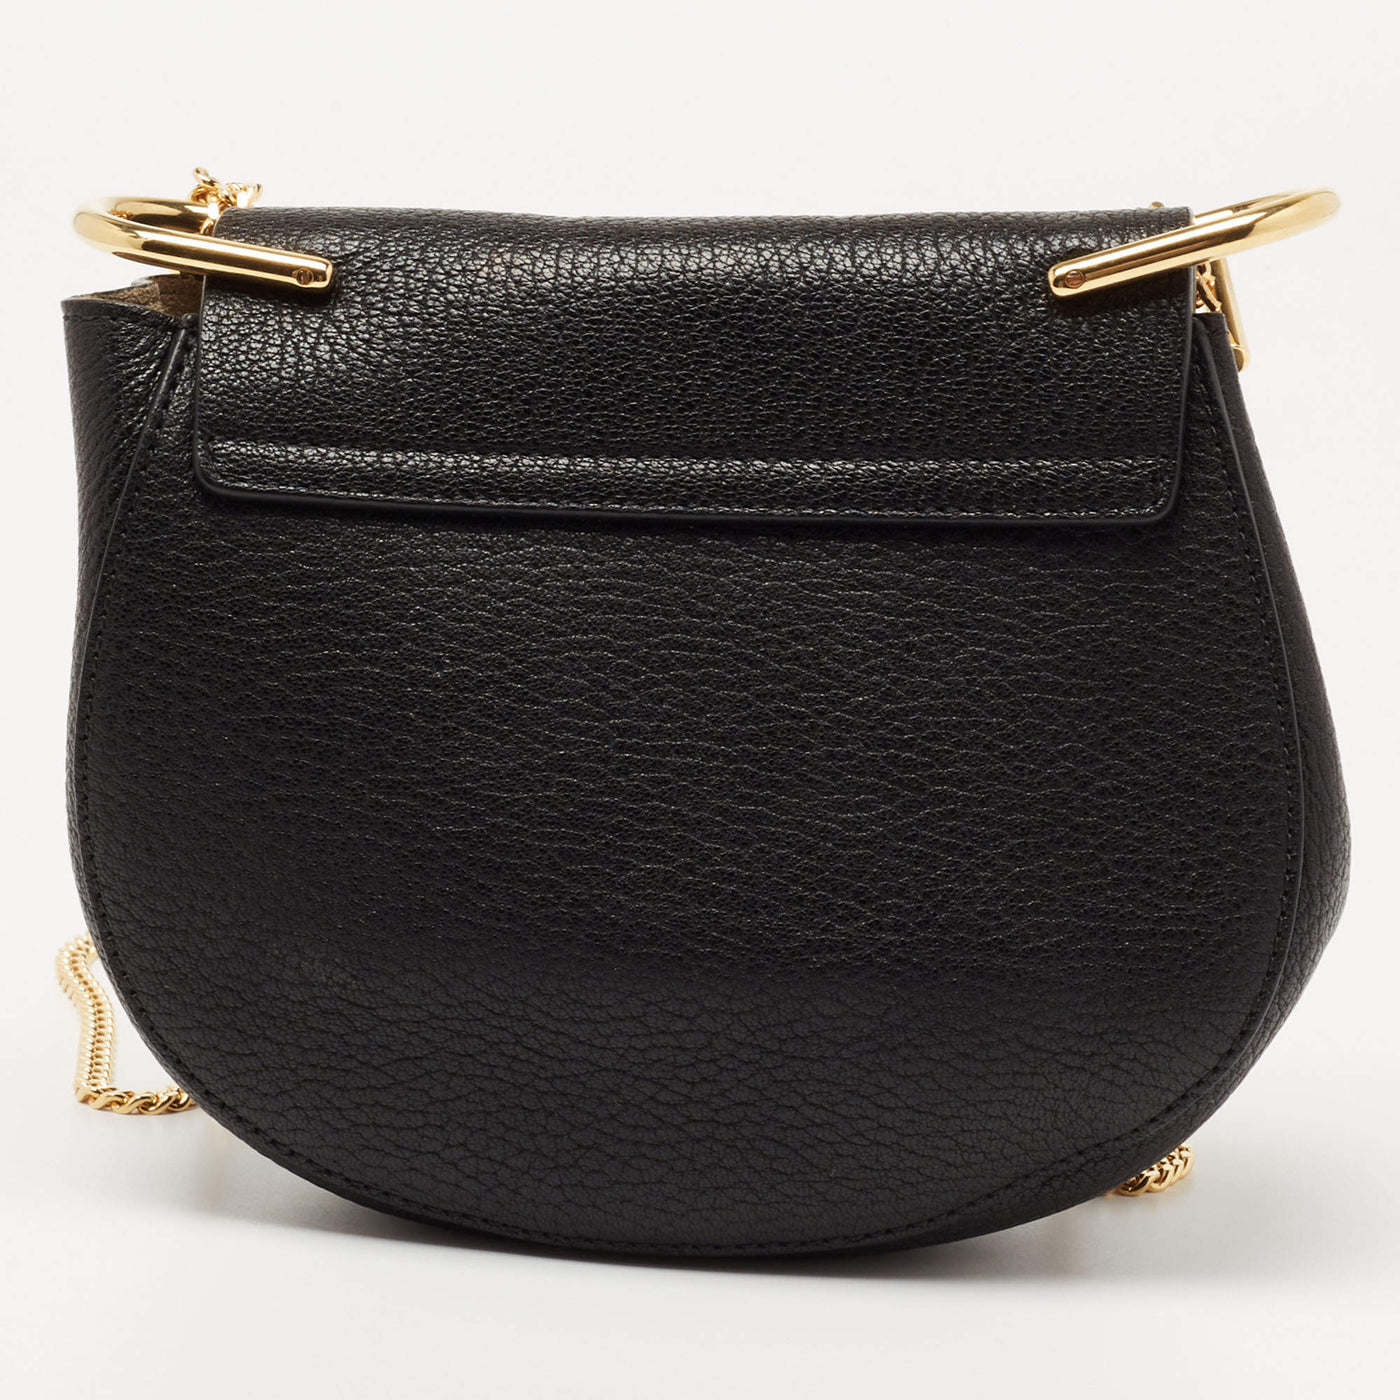 Chloe Black Leather Small Drew Shoulder Bag